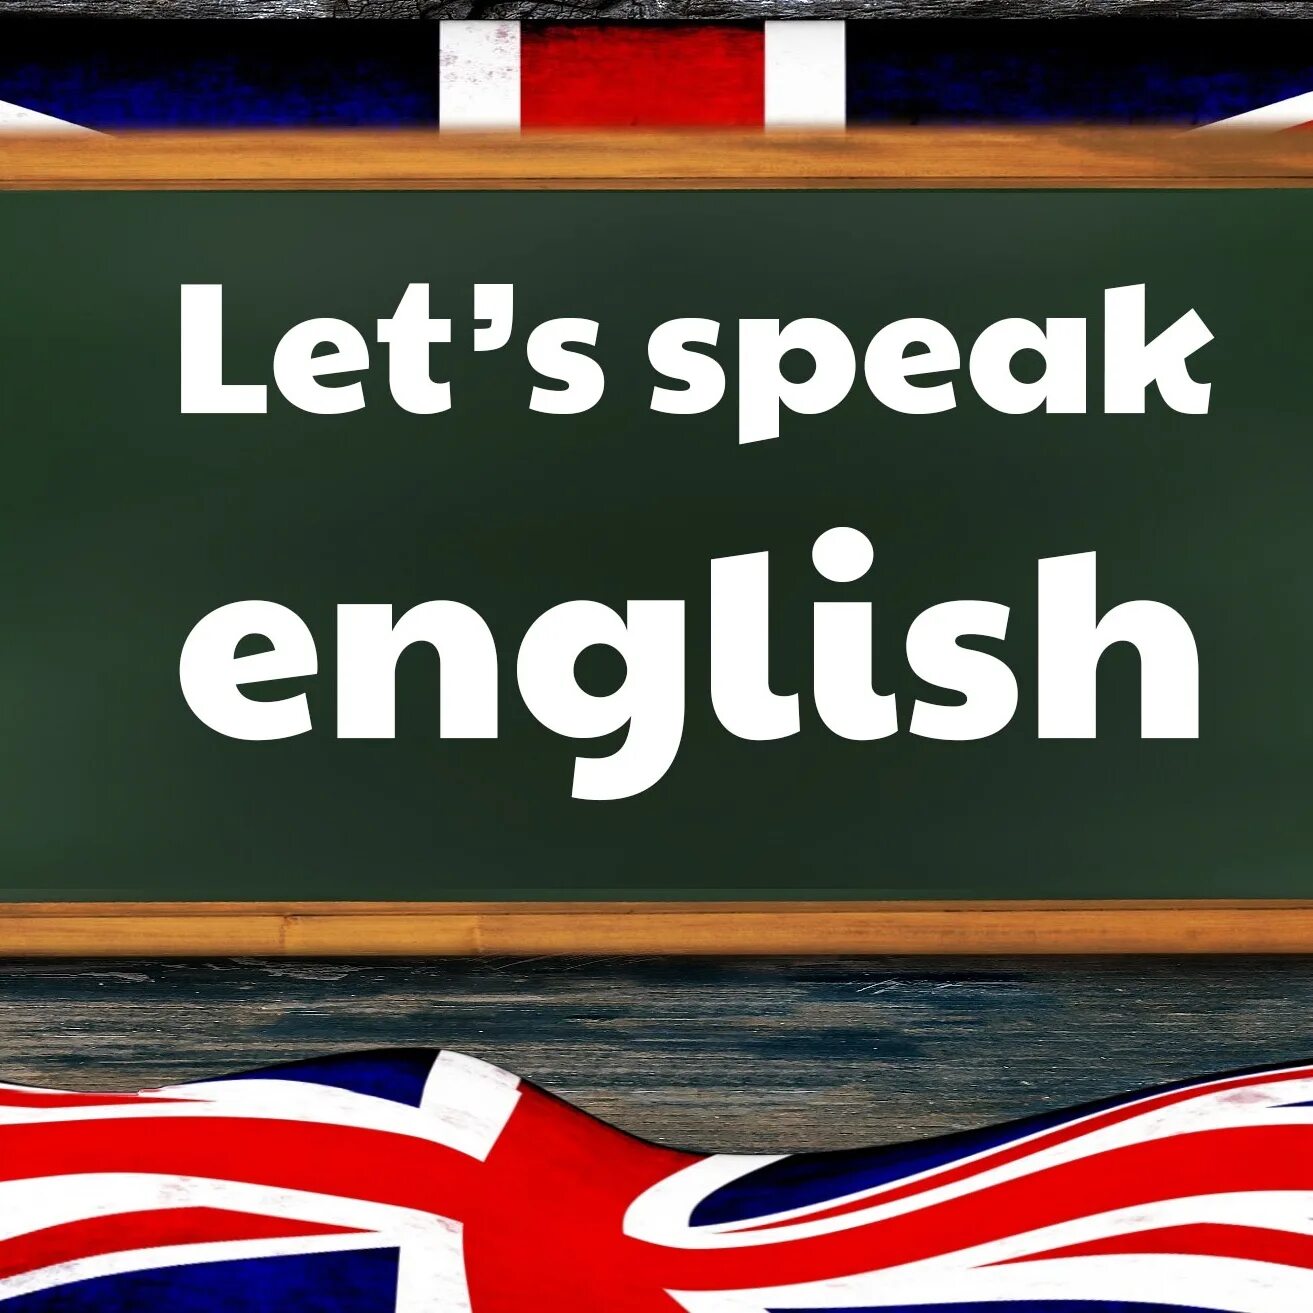 We can speak english